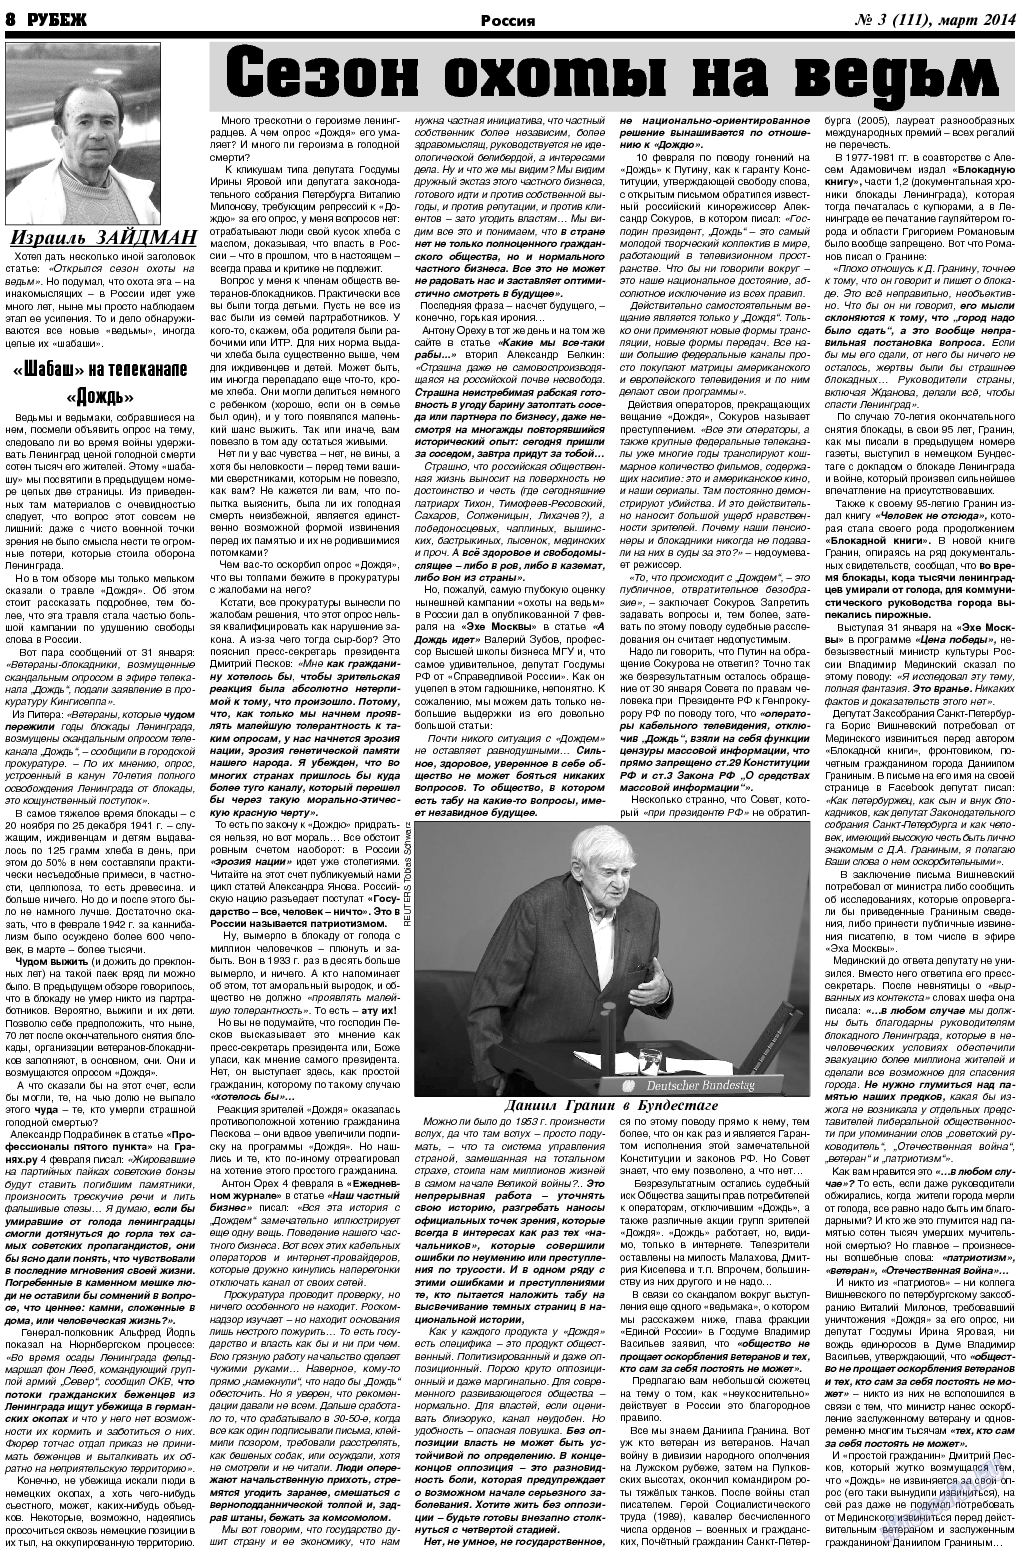 Рубеж, газета. 2014 №3 стр.8